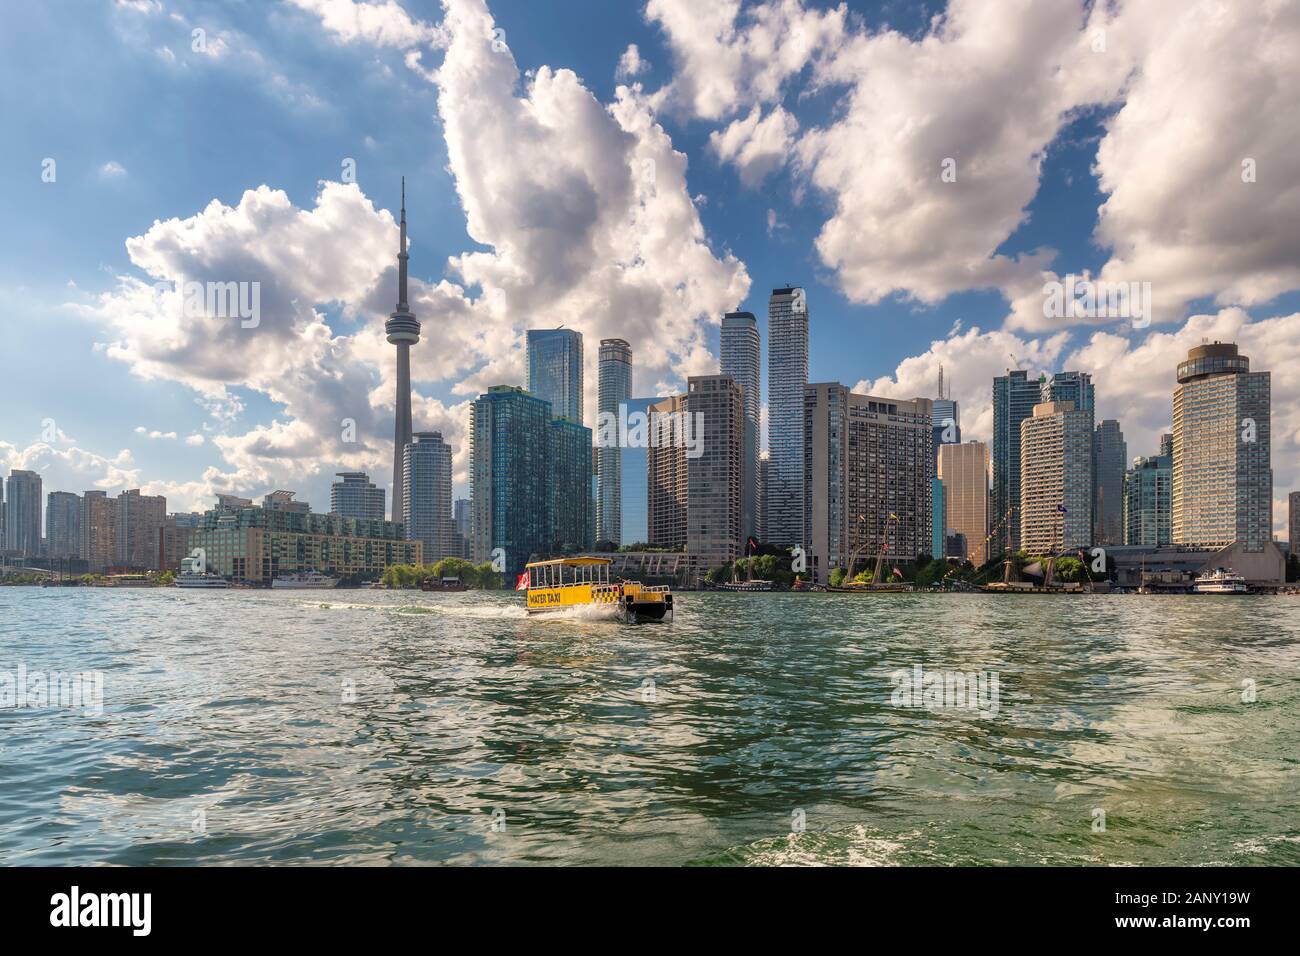 Toronto city skyline and water taxi in Ontario Lake, Toronto, Ontario, Canada. Stock Photo